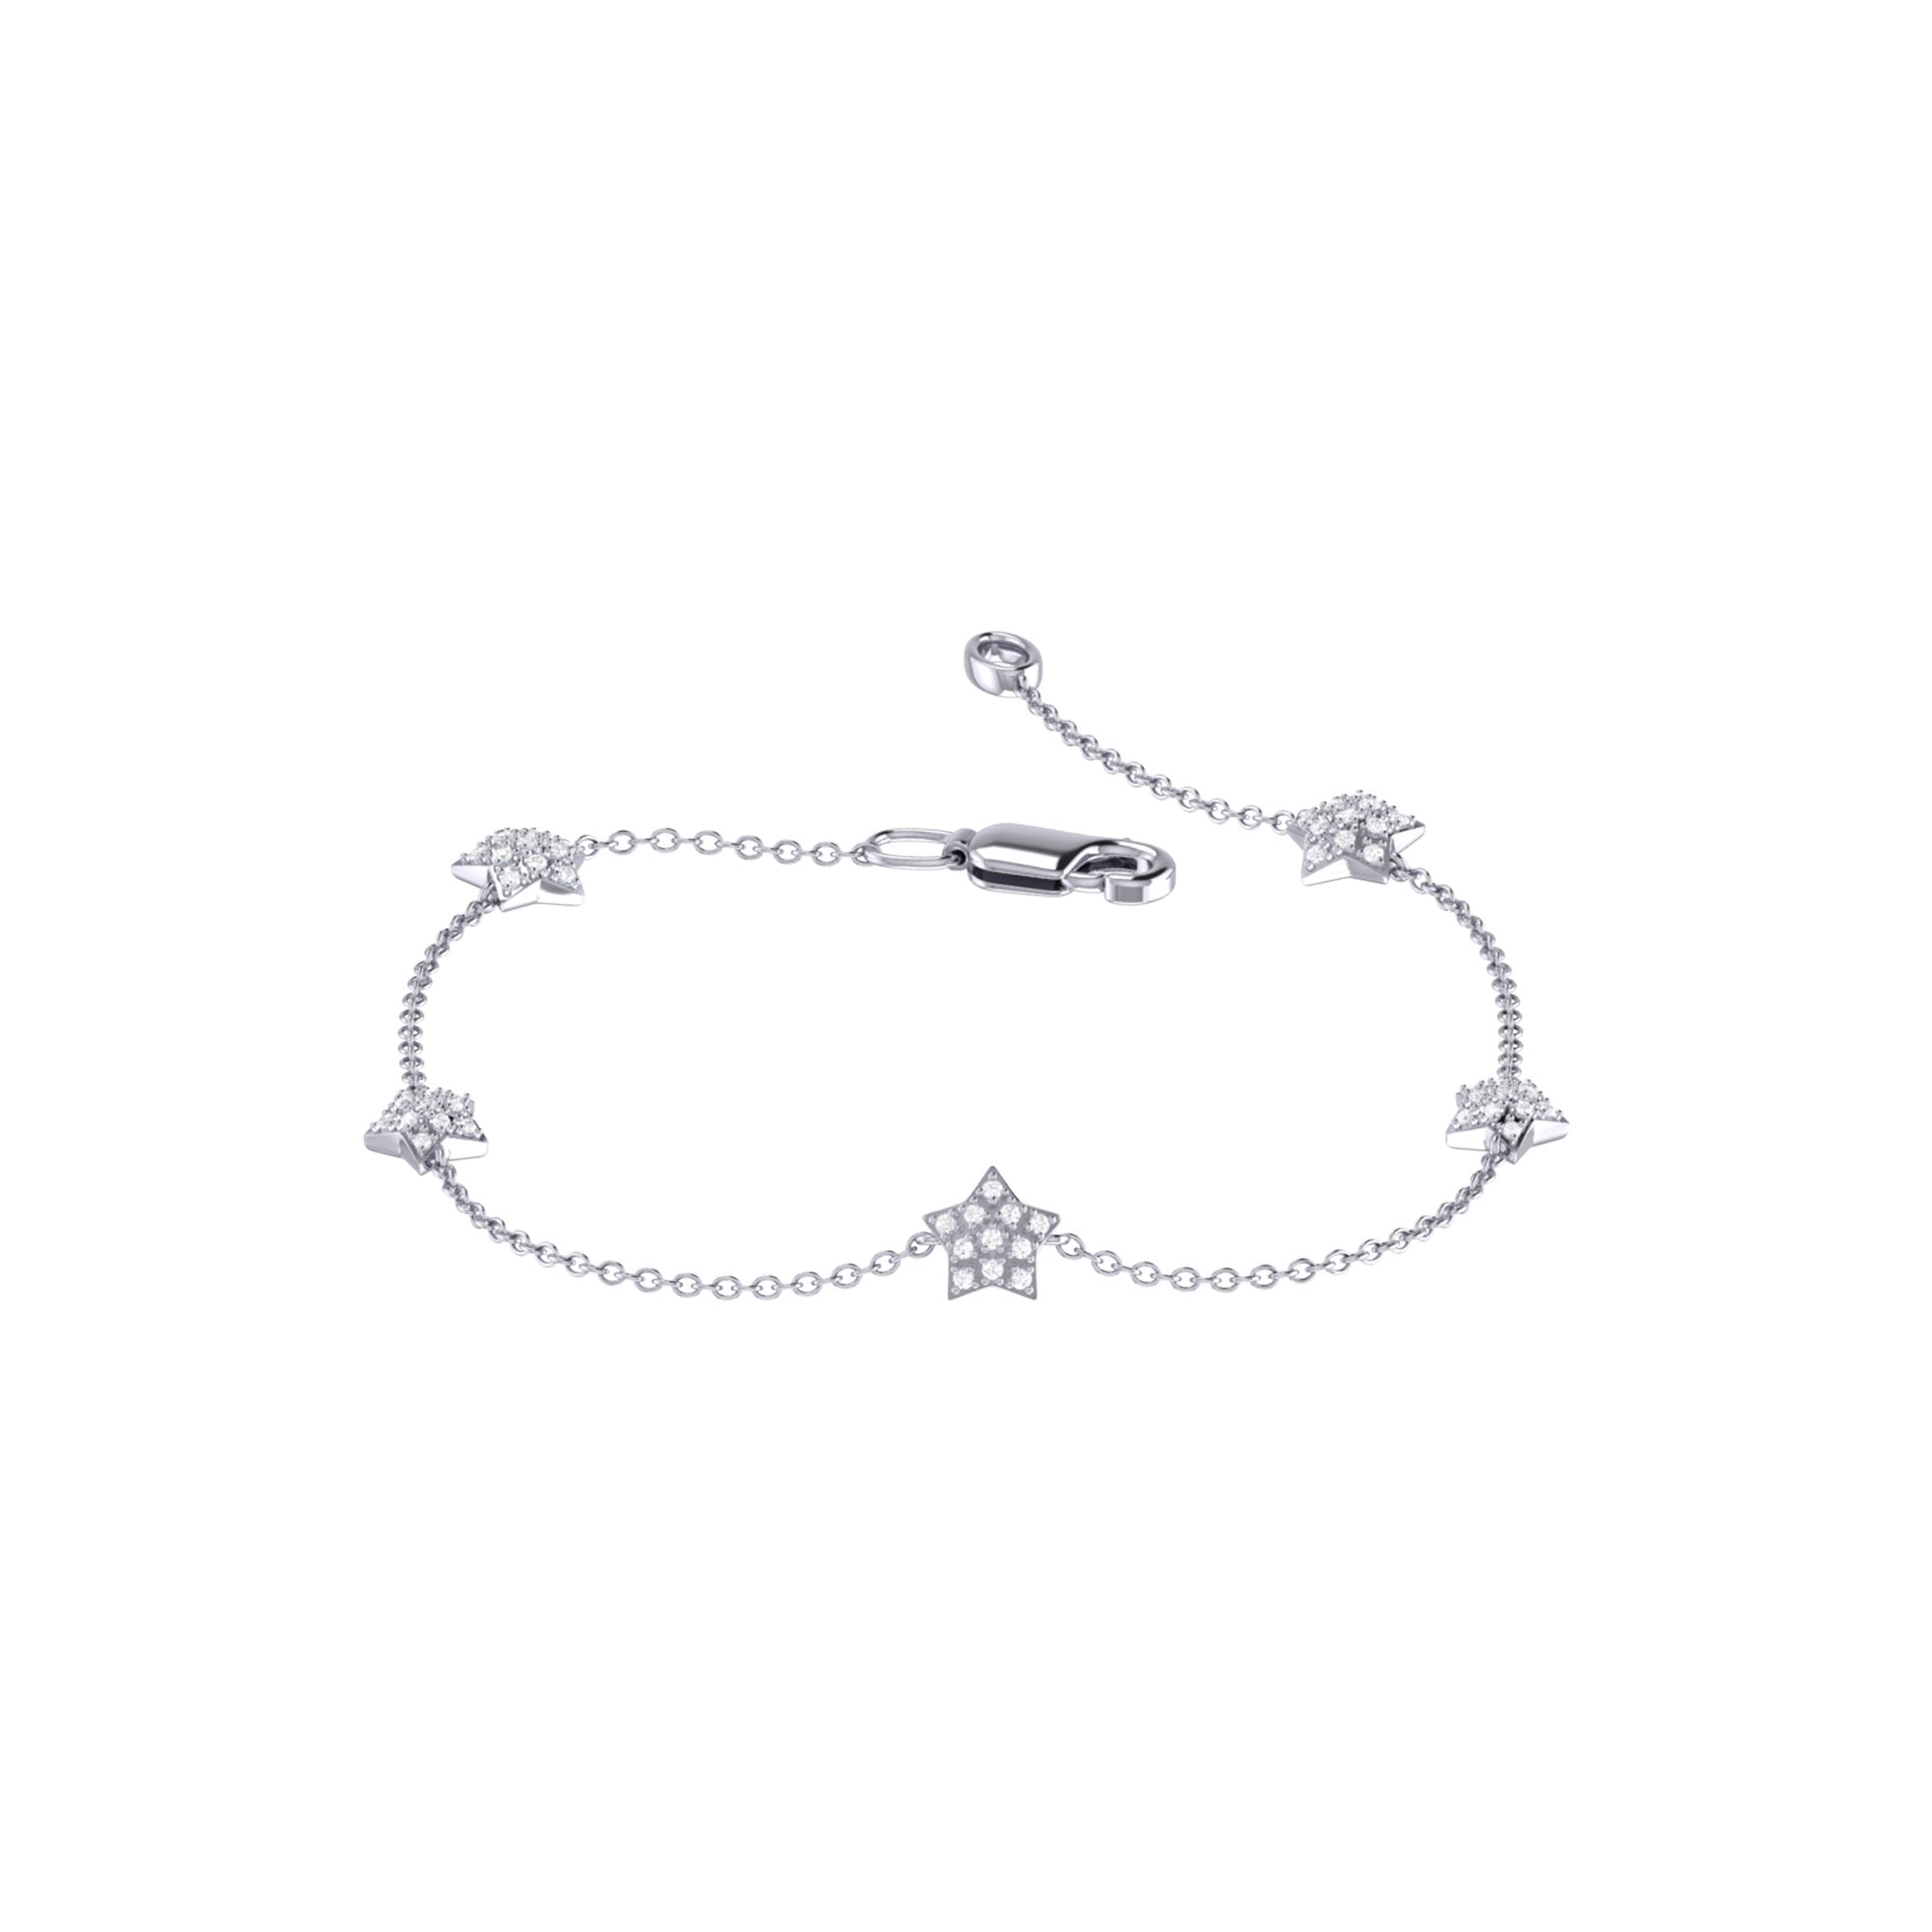 Starkissed Diamond Bracelet in 14K White Gold - Jewelry & Watches - Bijou Her -  -  - 